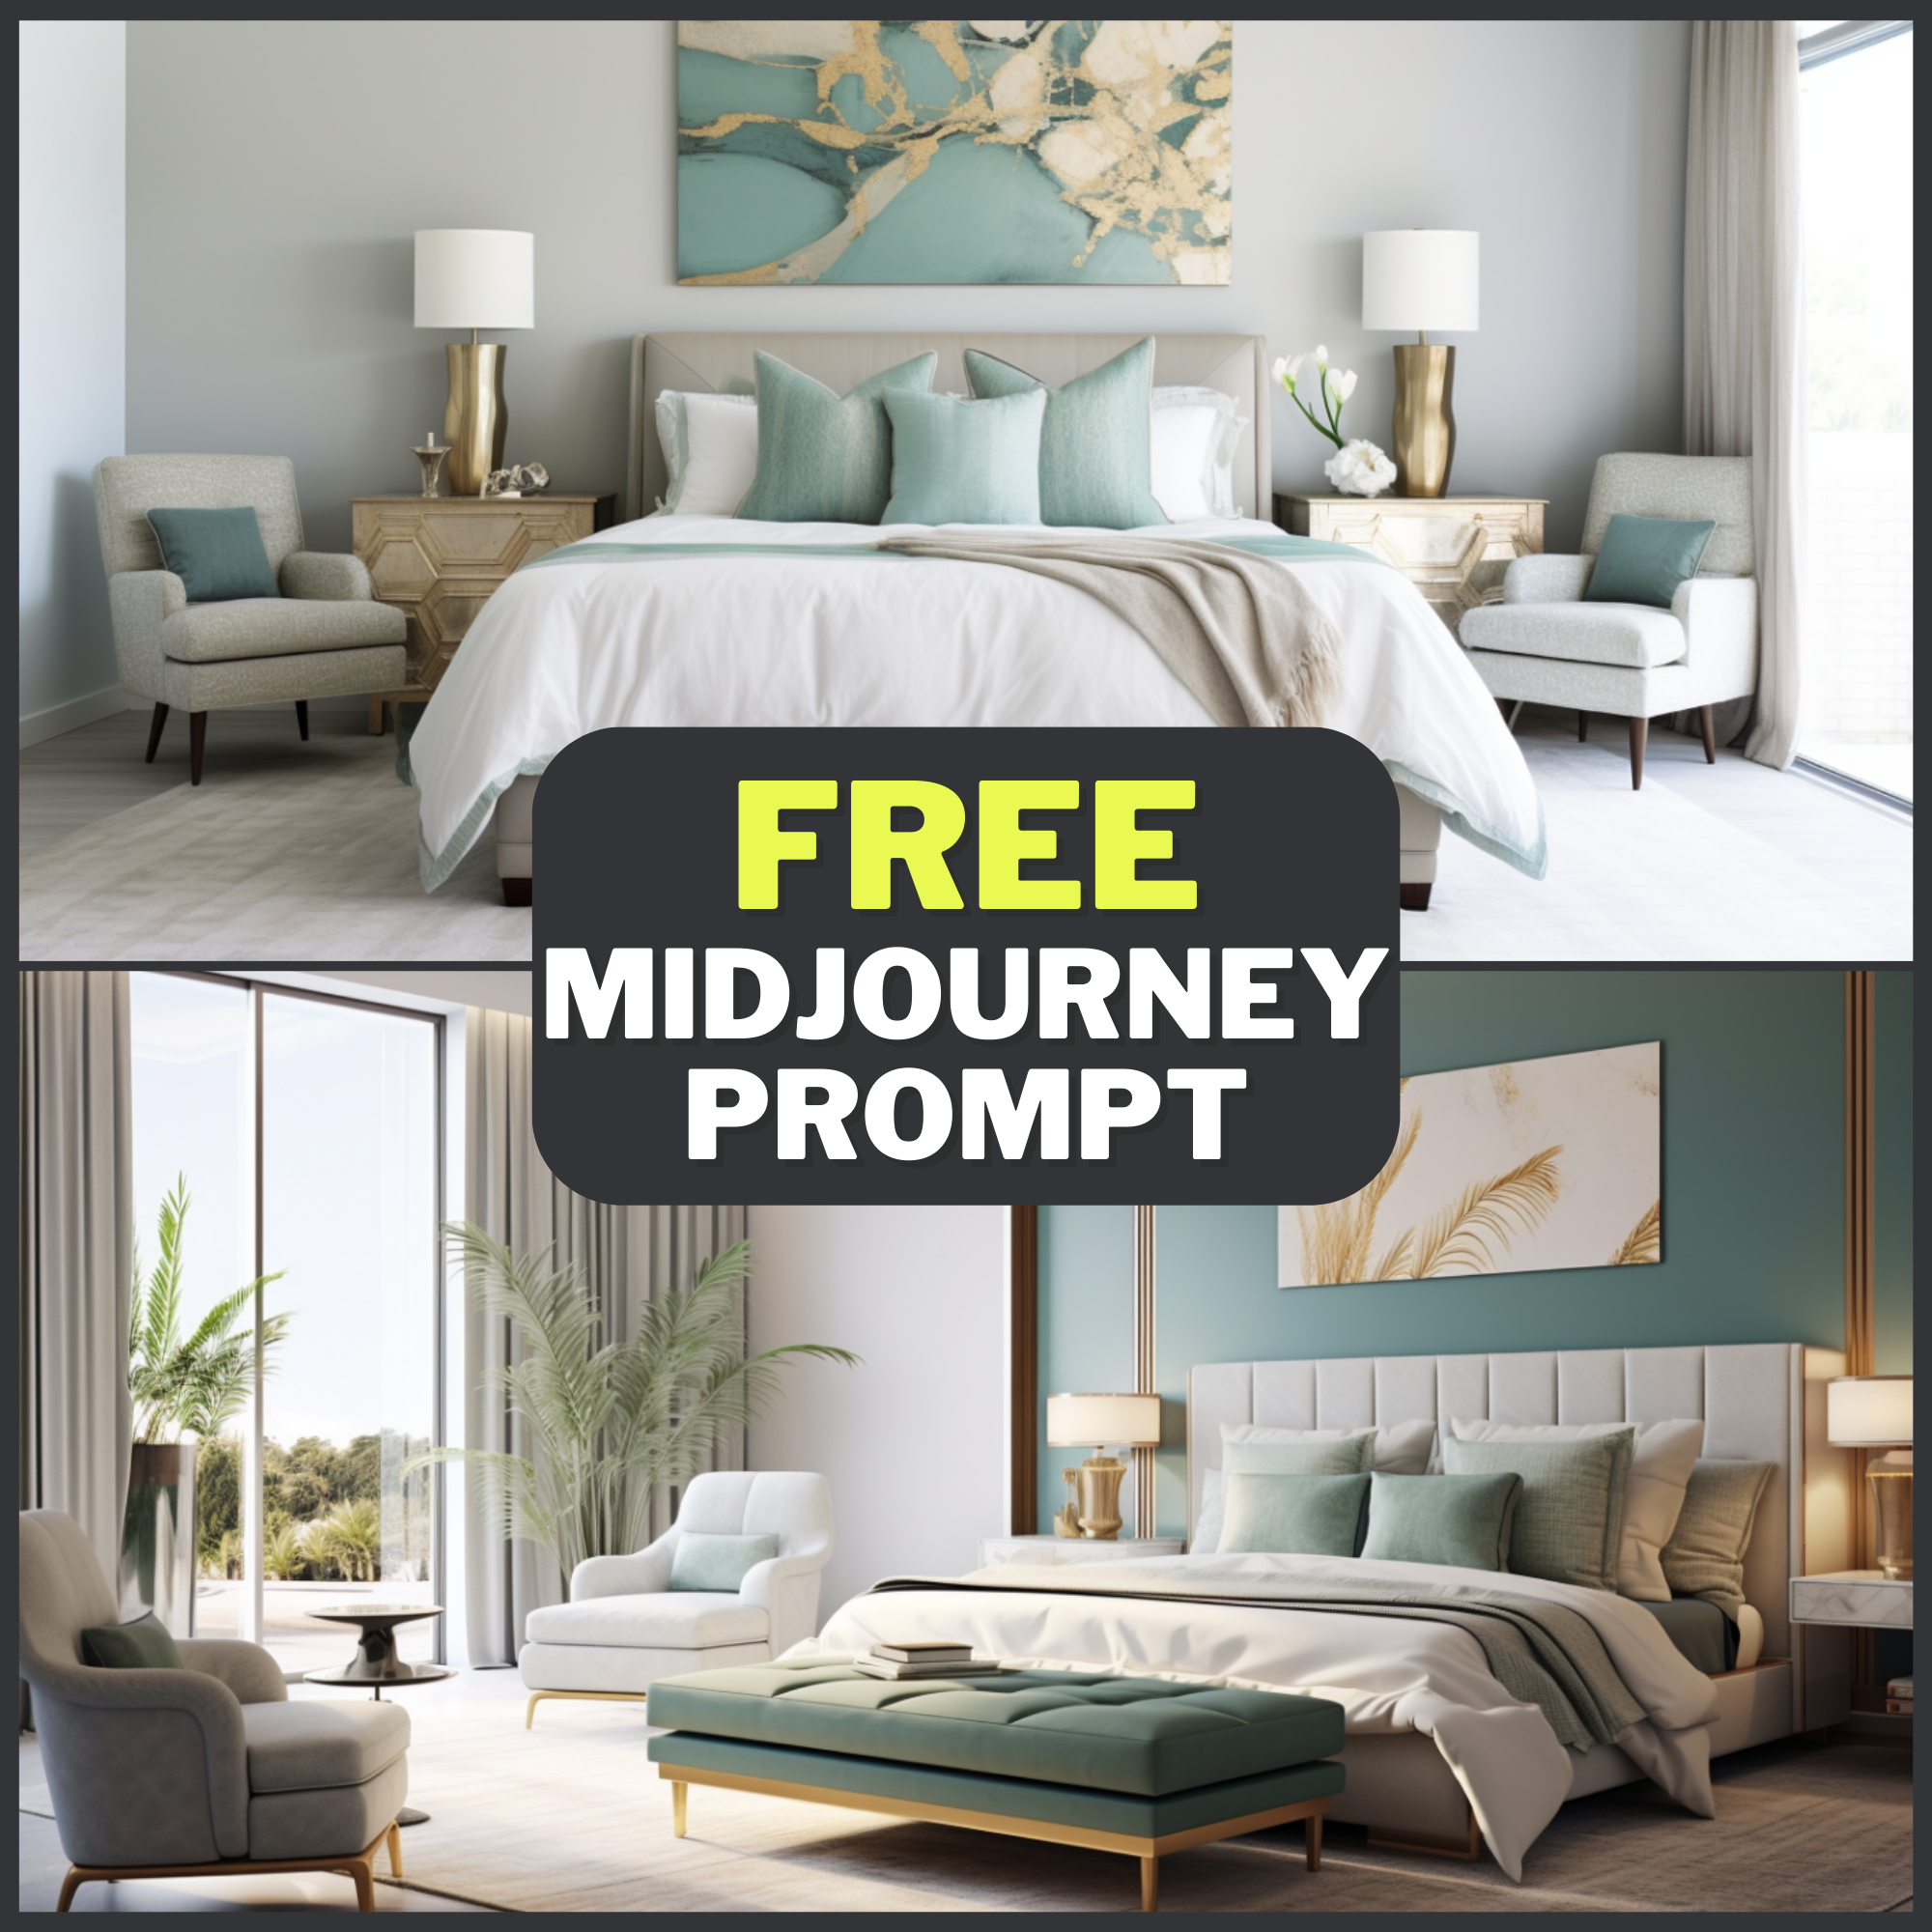 Gold White Bedroom Free Midjourney Prompt 1